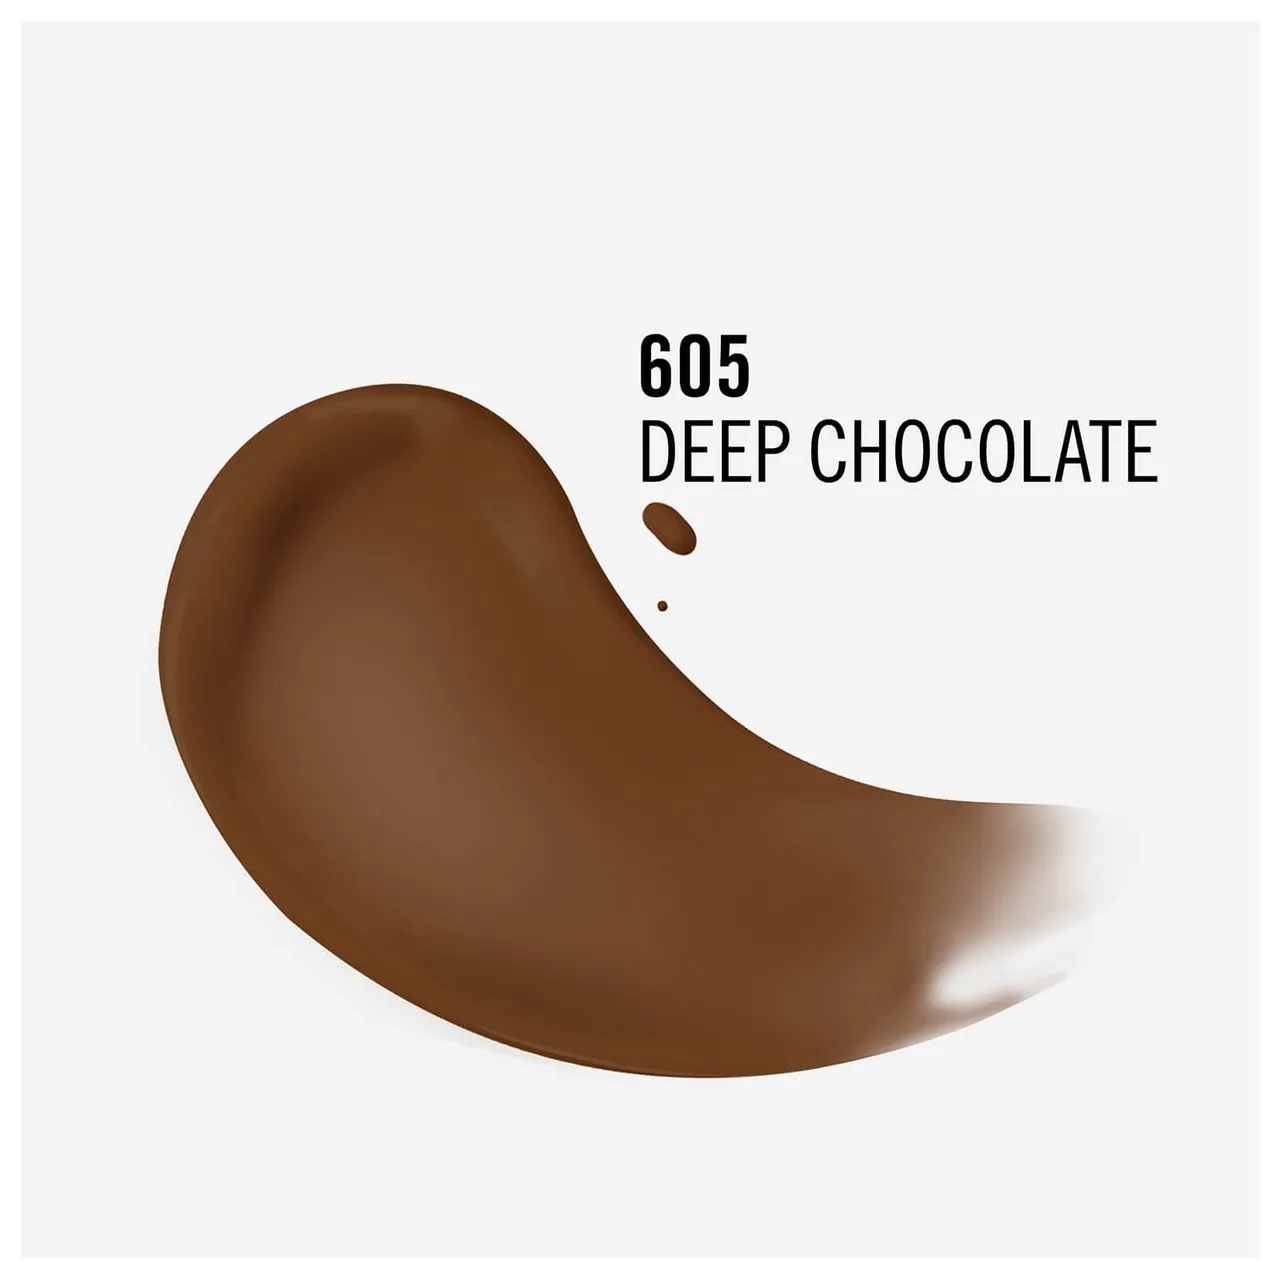 Rimmel Kind and Free Skin Tint Moisturising Foundation 30ml (Various Shades) - Deep Chocolate